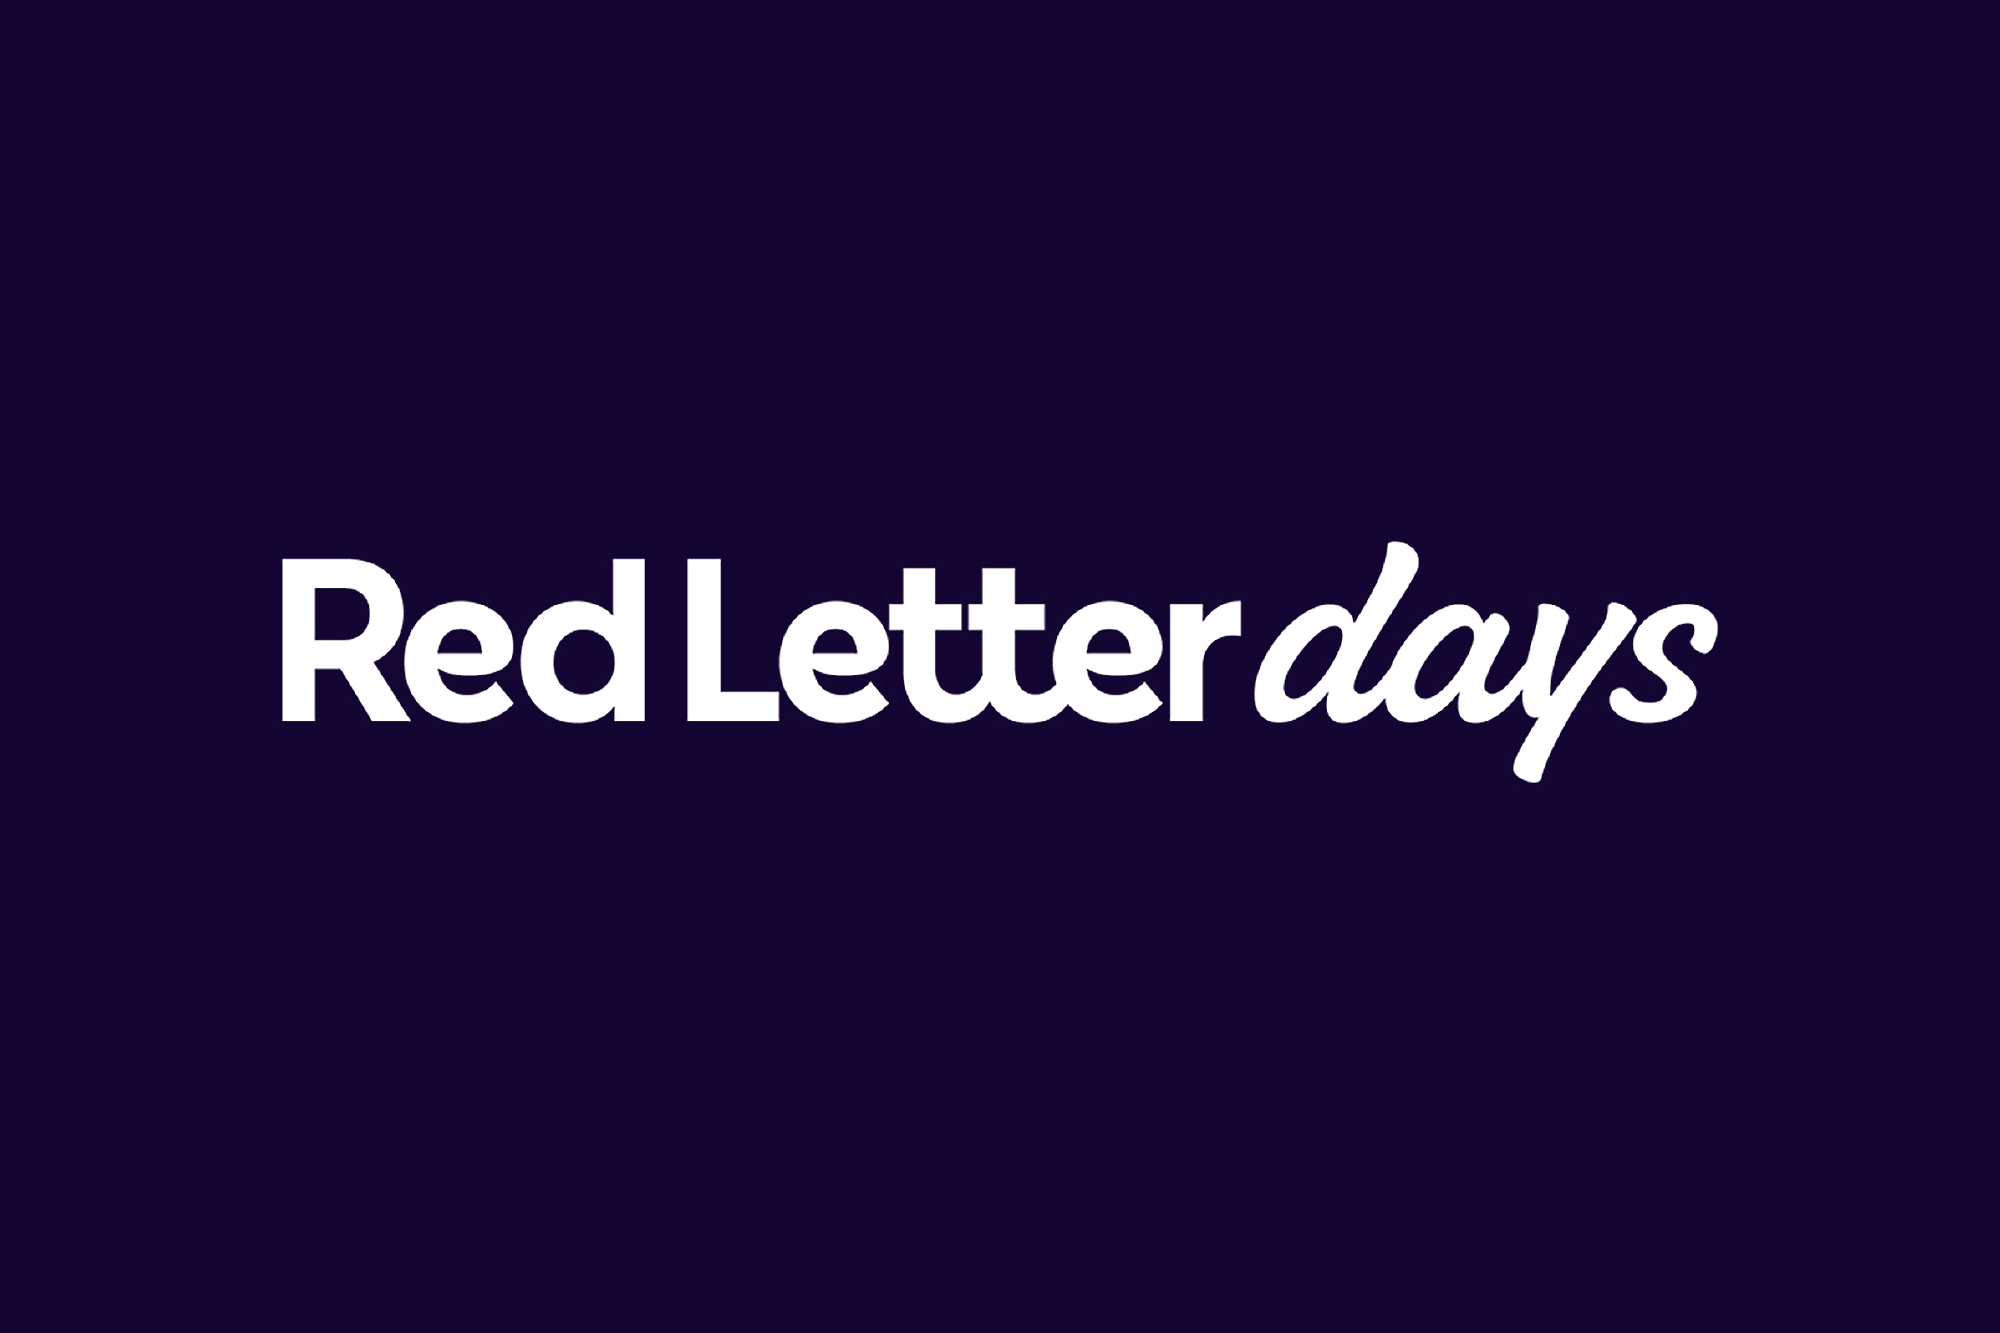 Red Letter Days Logo - White on Midnight Blue